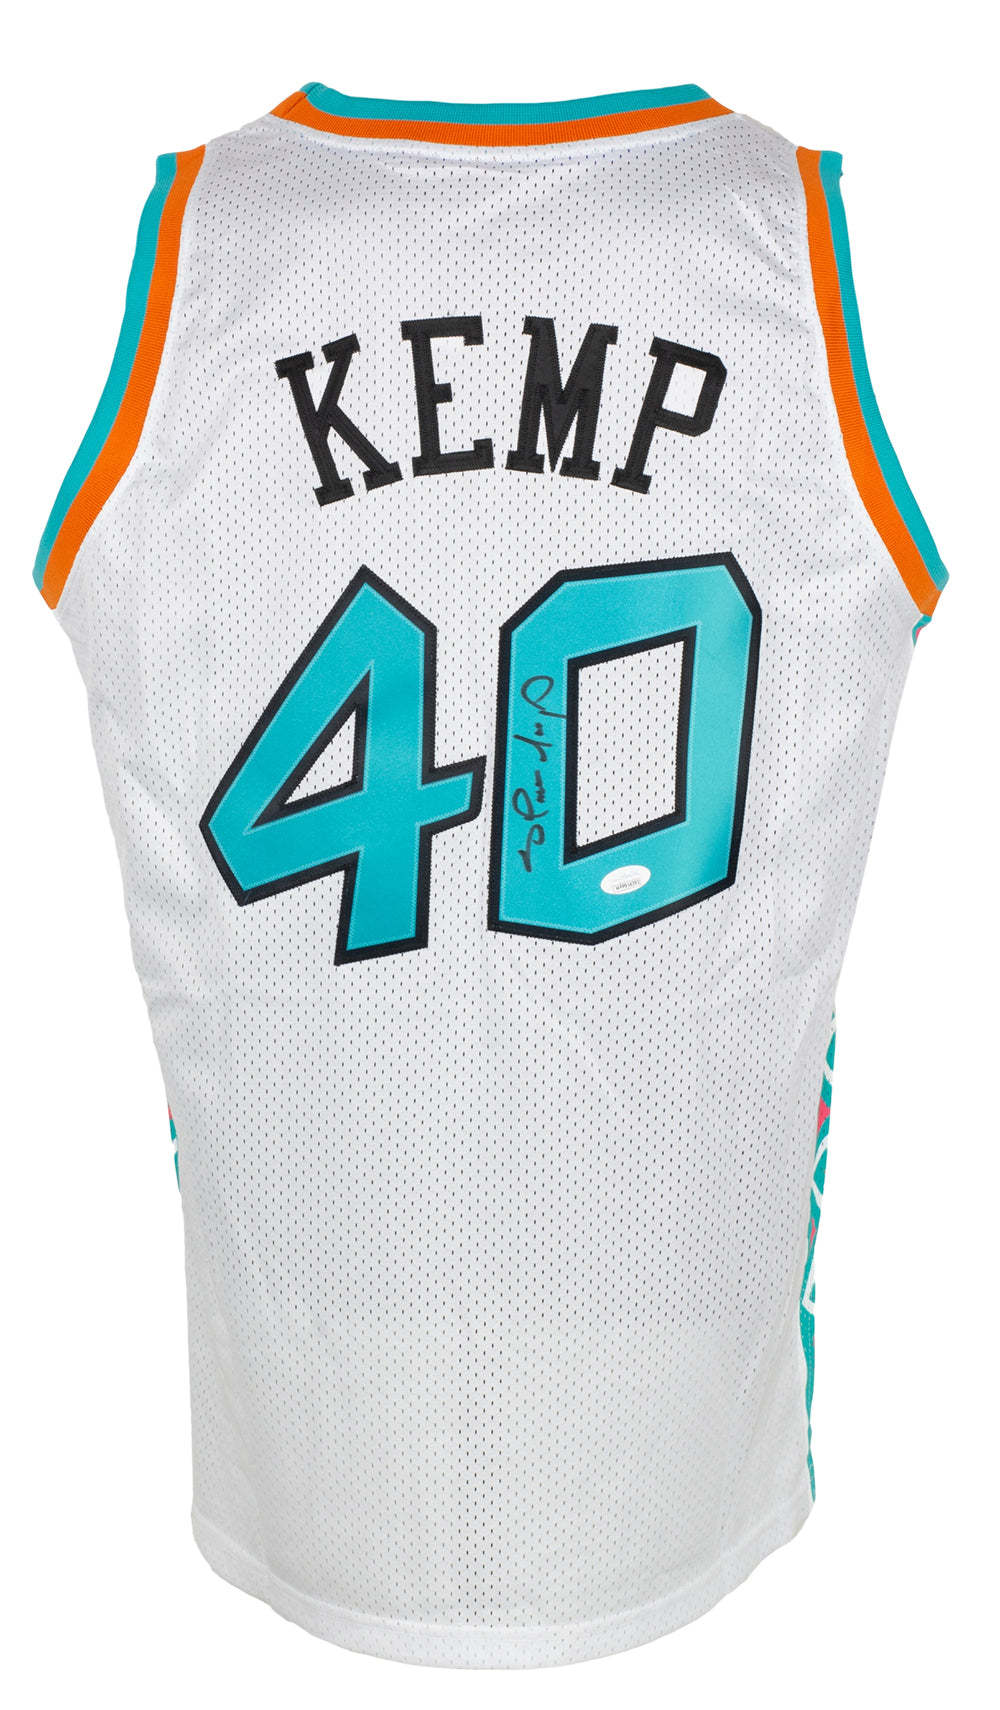 Vintage 1994 Shawn Kemp NBA All Star Game Champion Jersey Size